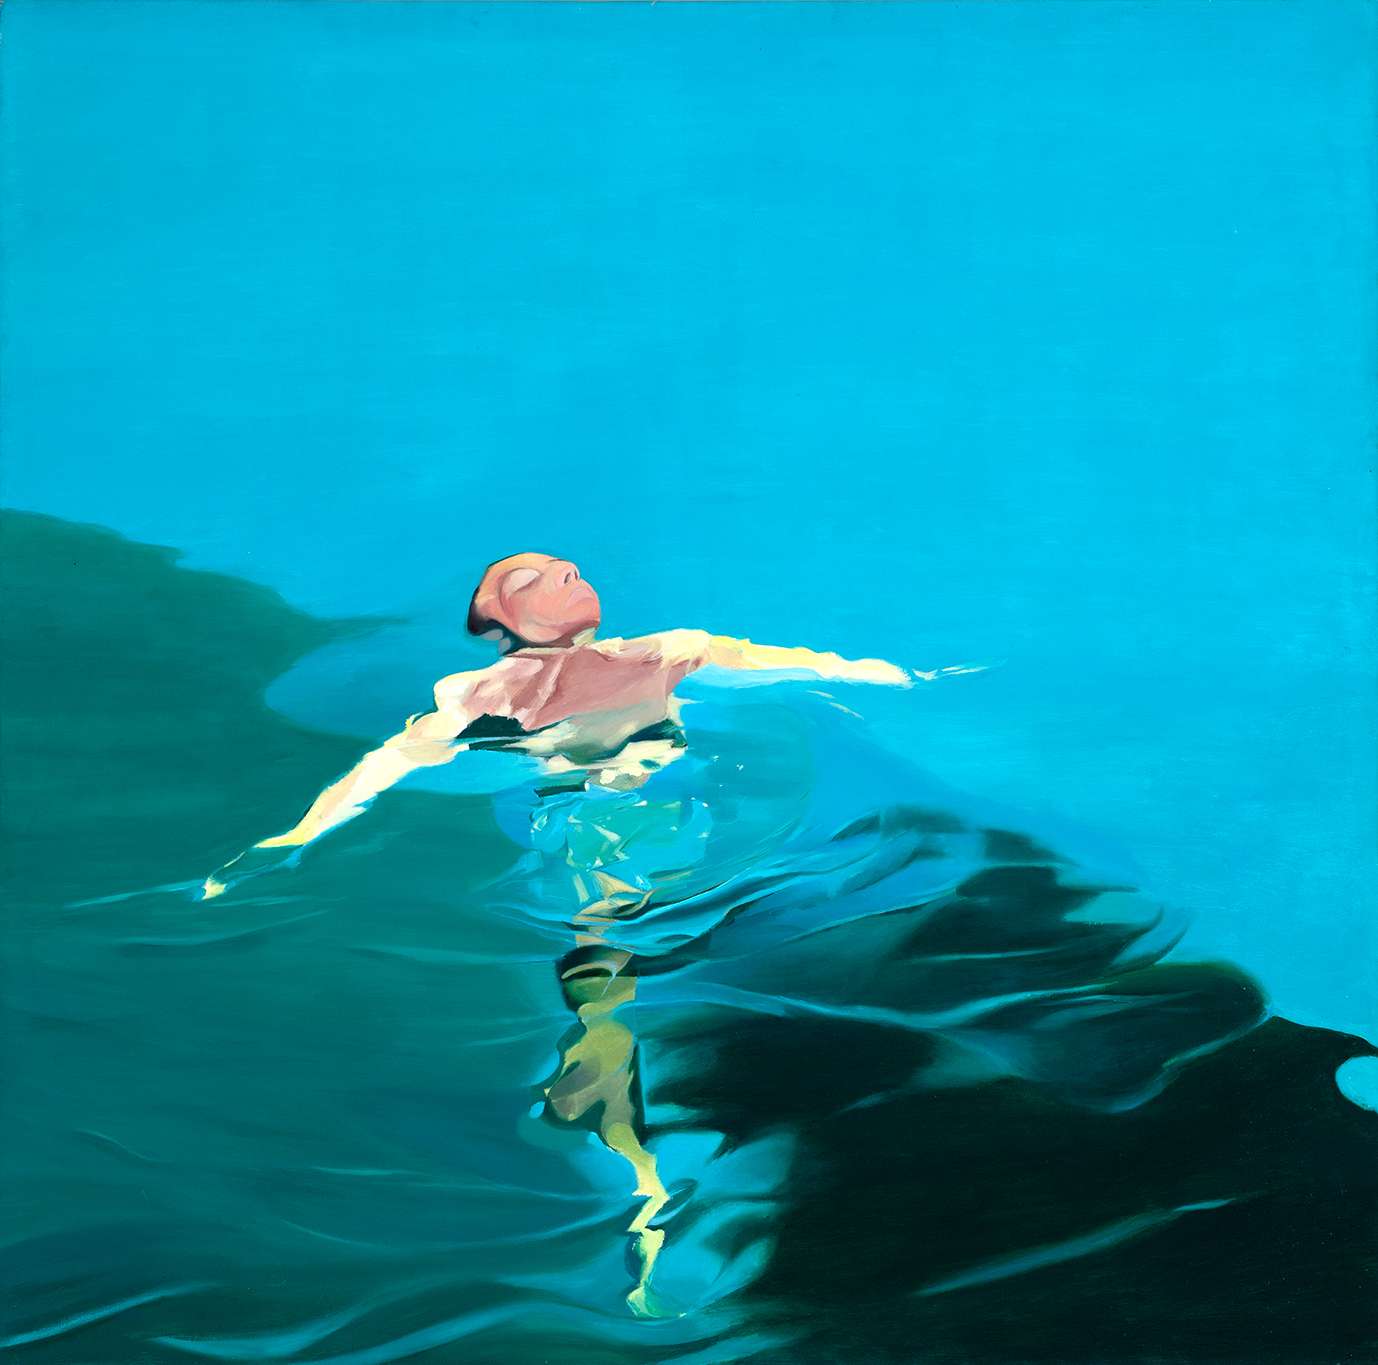 The Wick - Discover Neil Stokoe, Floating Figure II, 1970